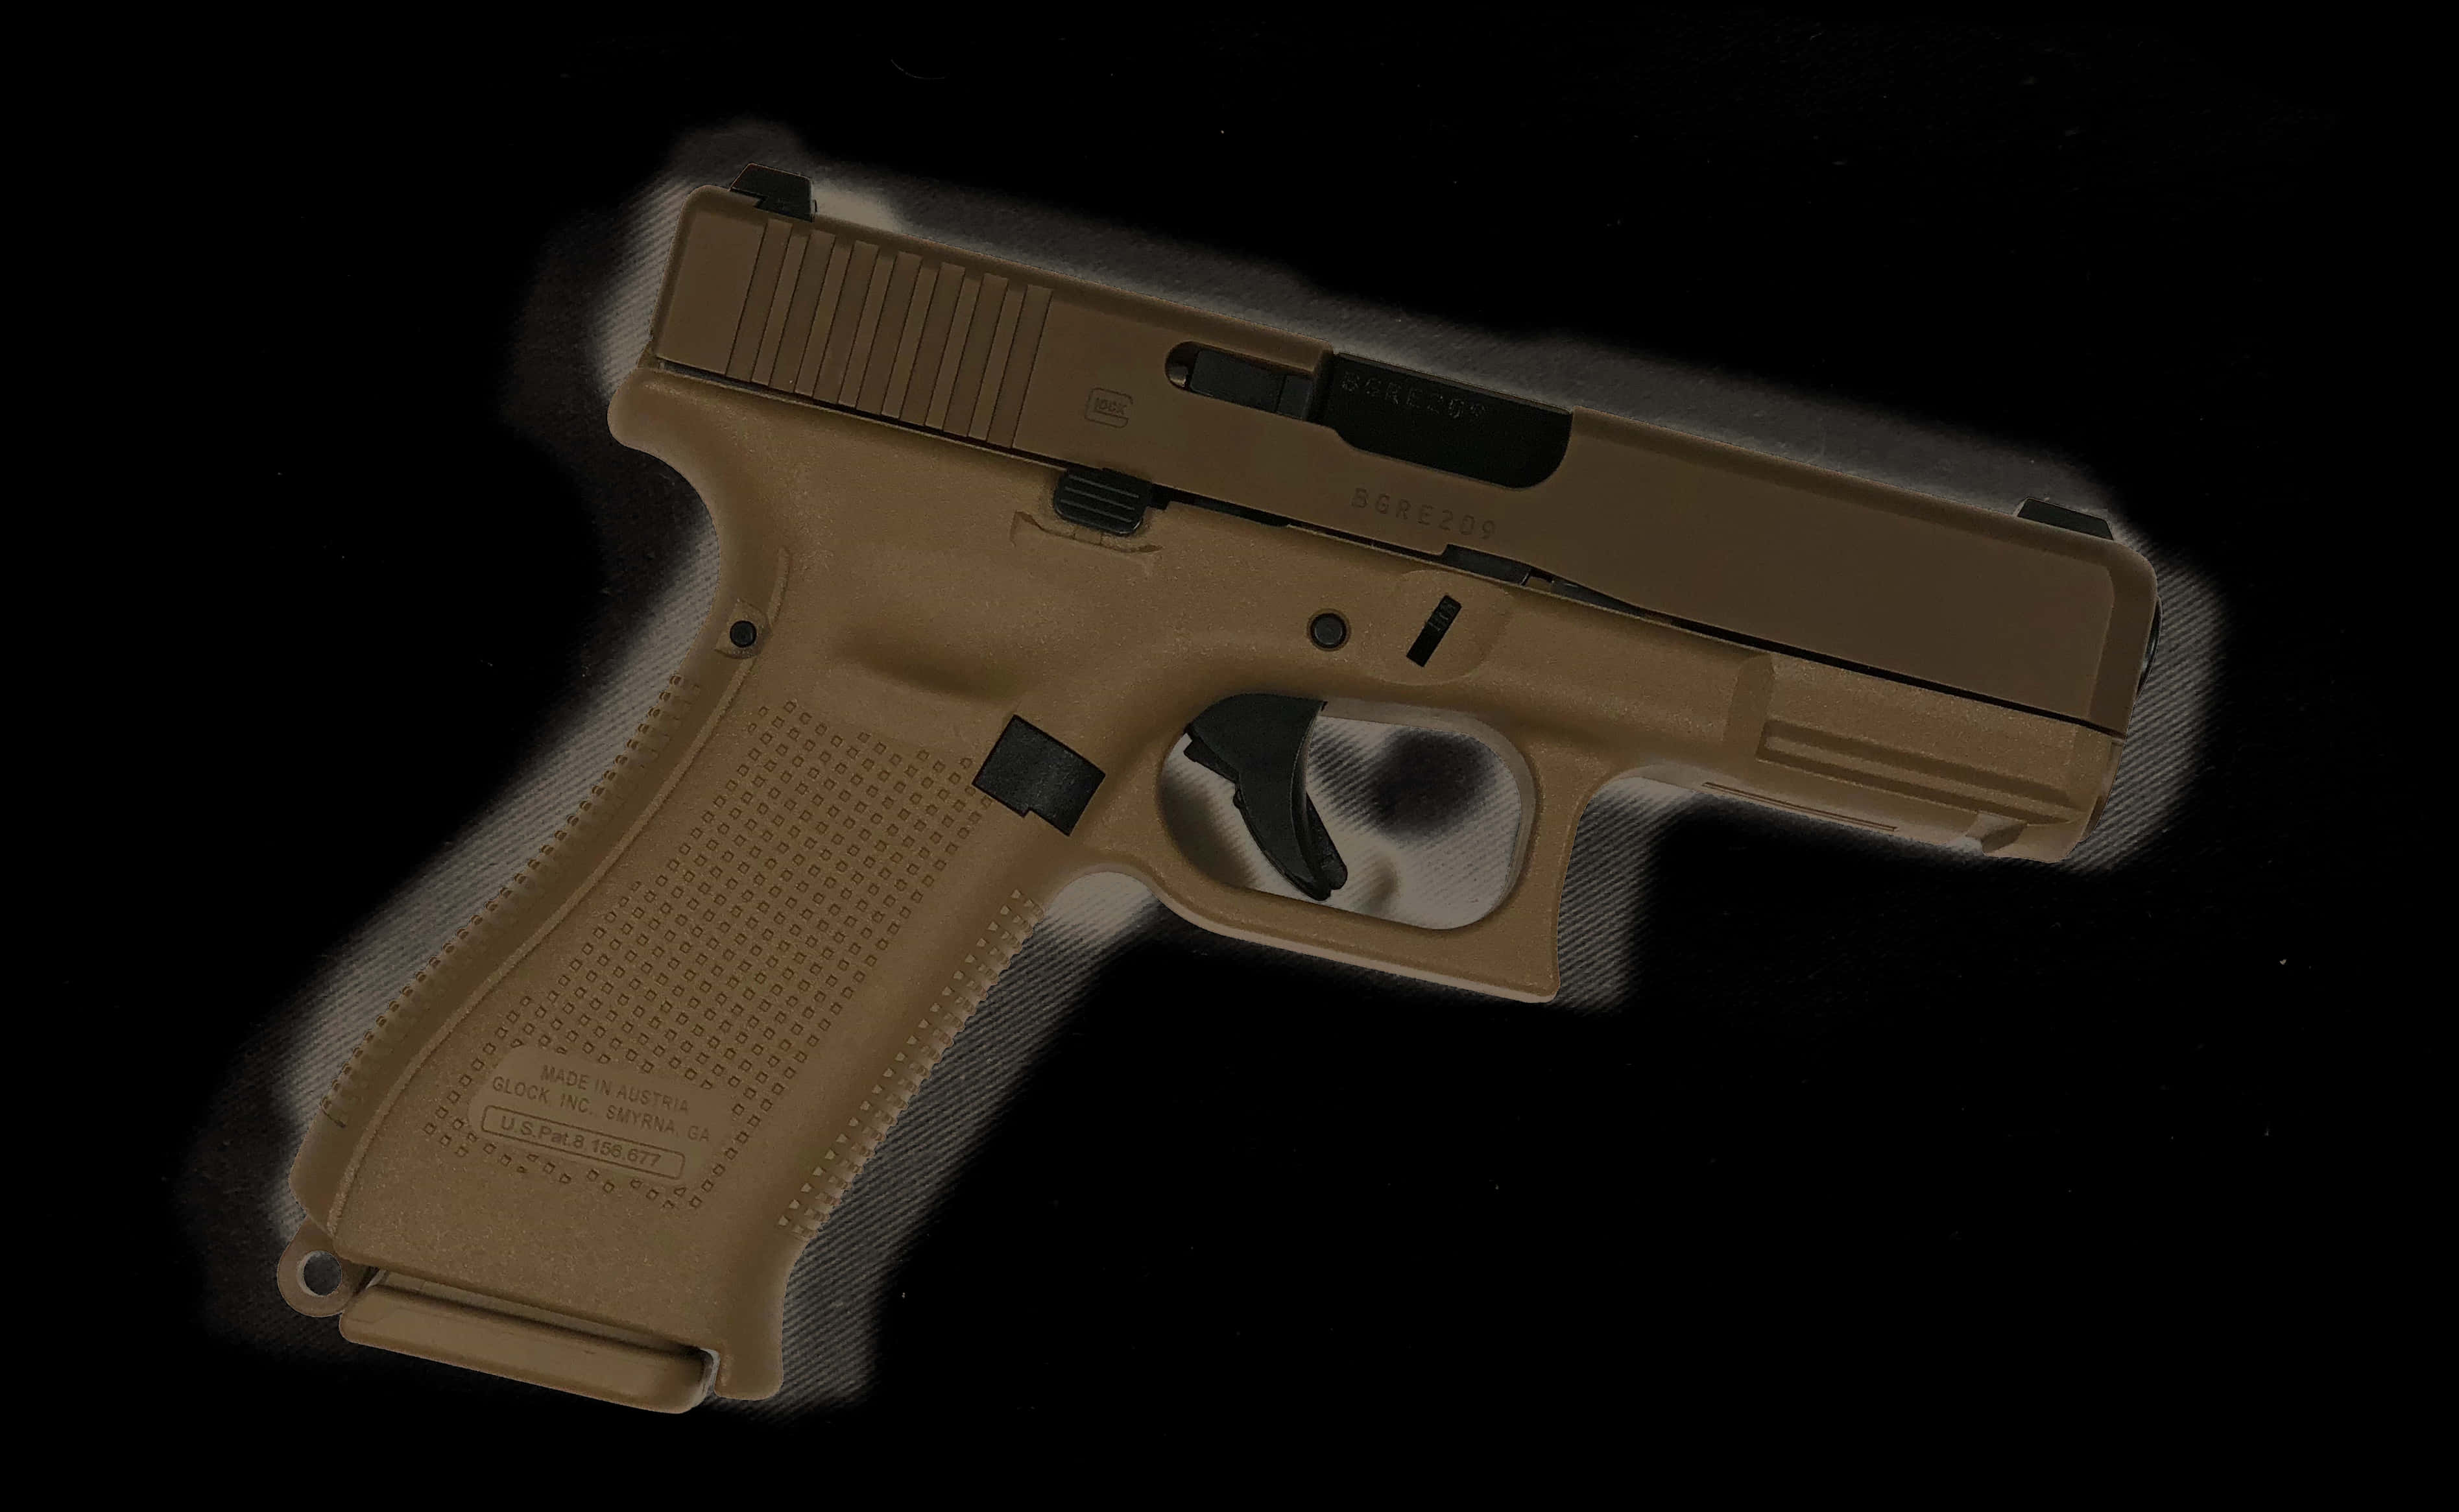 A Tan Handgun On A Black Background